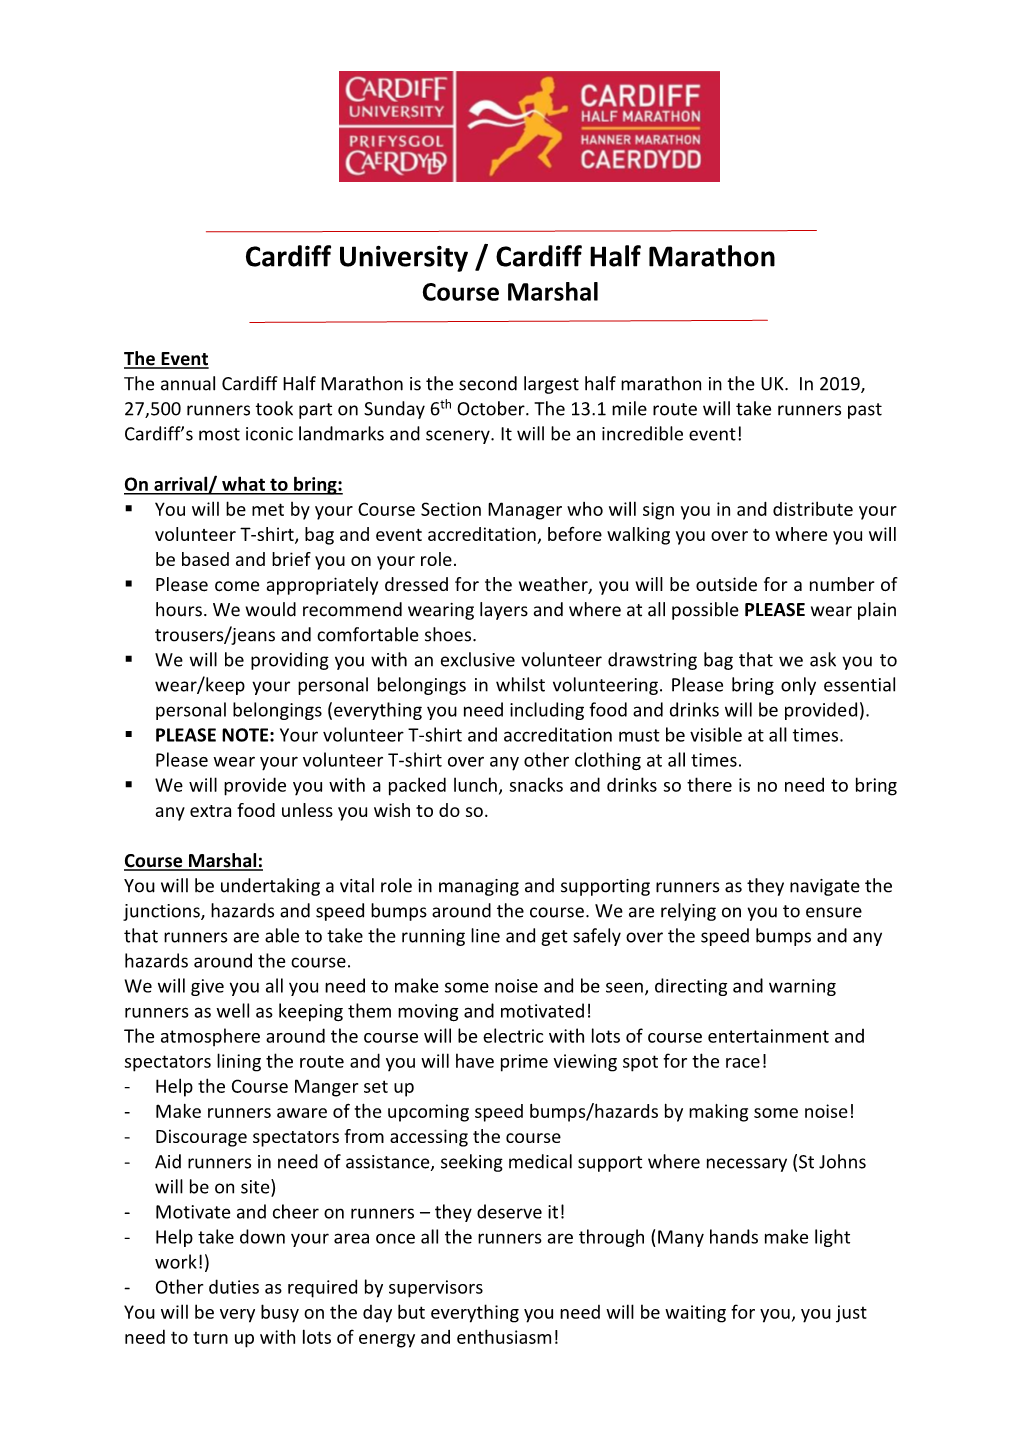 Cardiff University / Cardiff Half Marathon Course Marshal